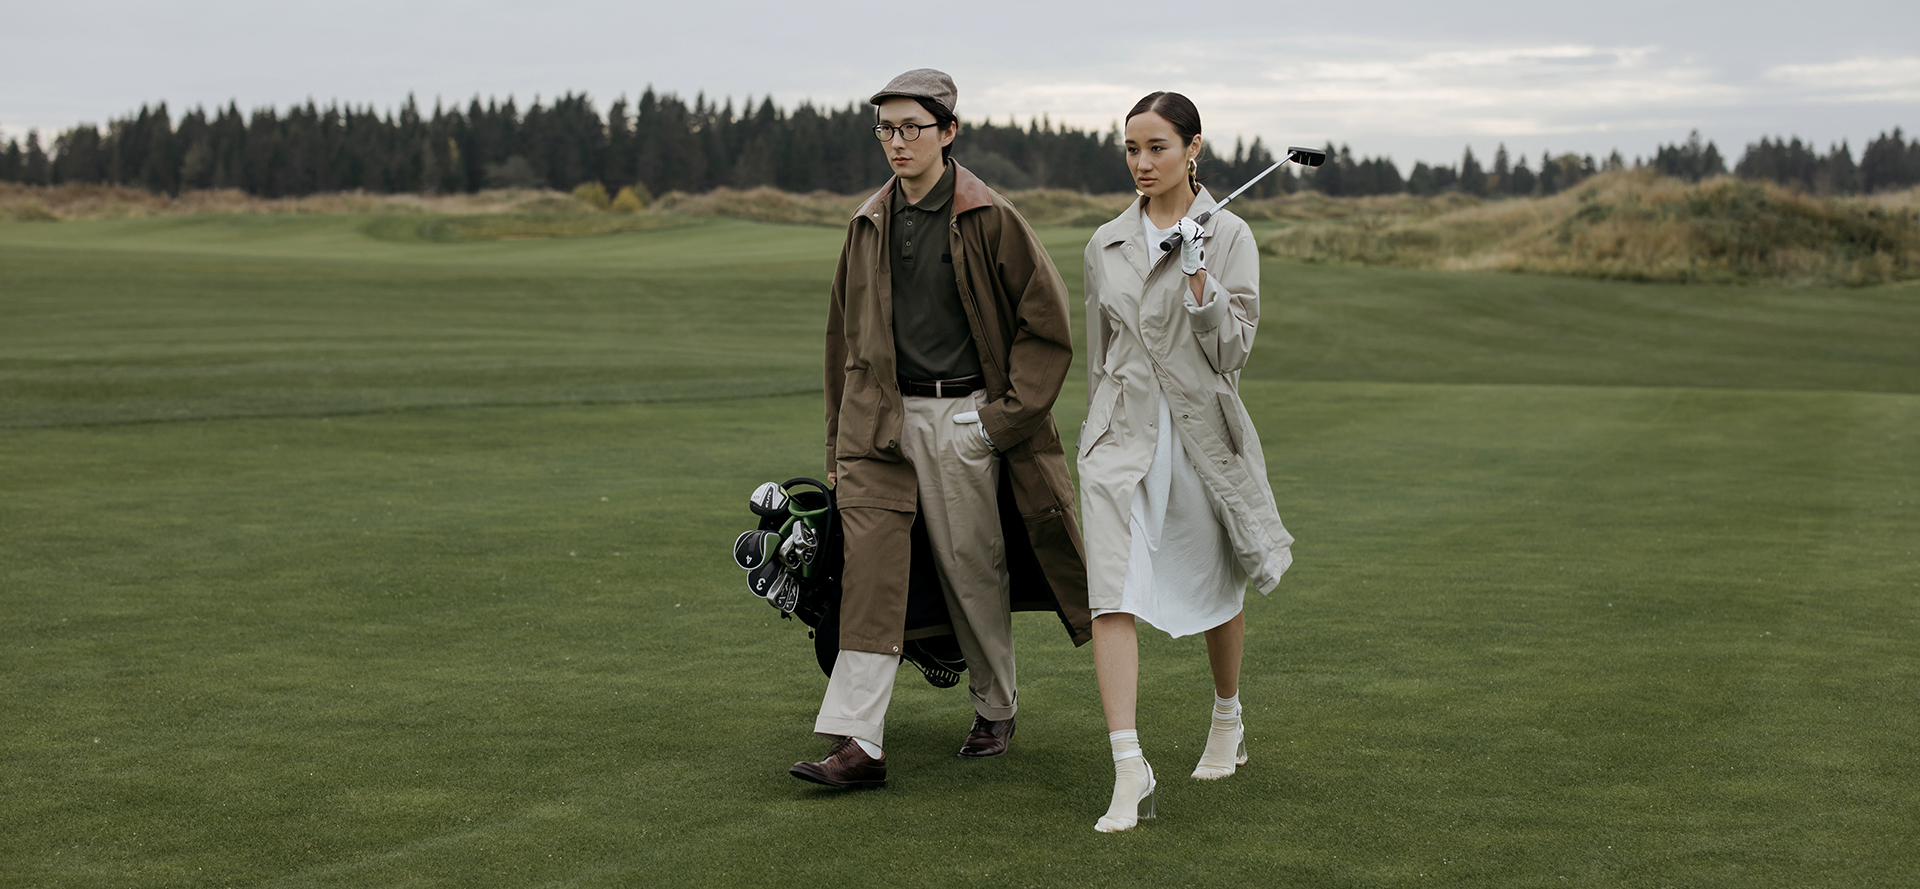 Golfers on a date.